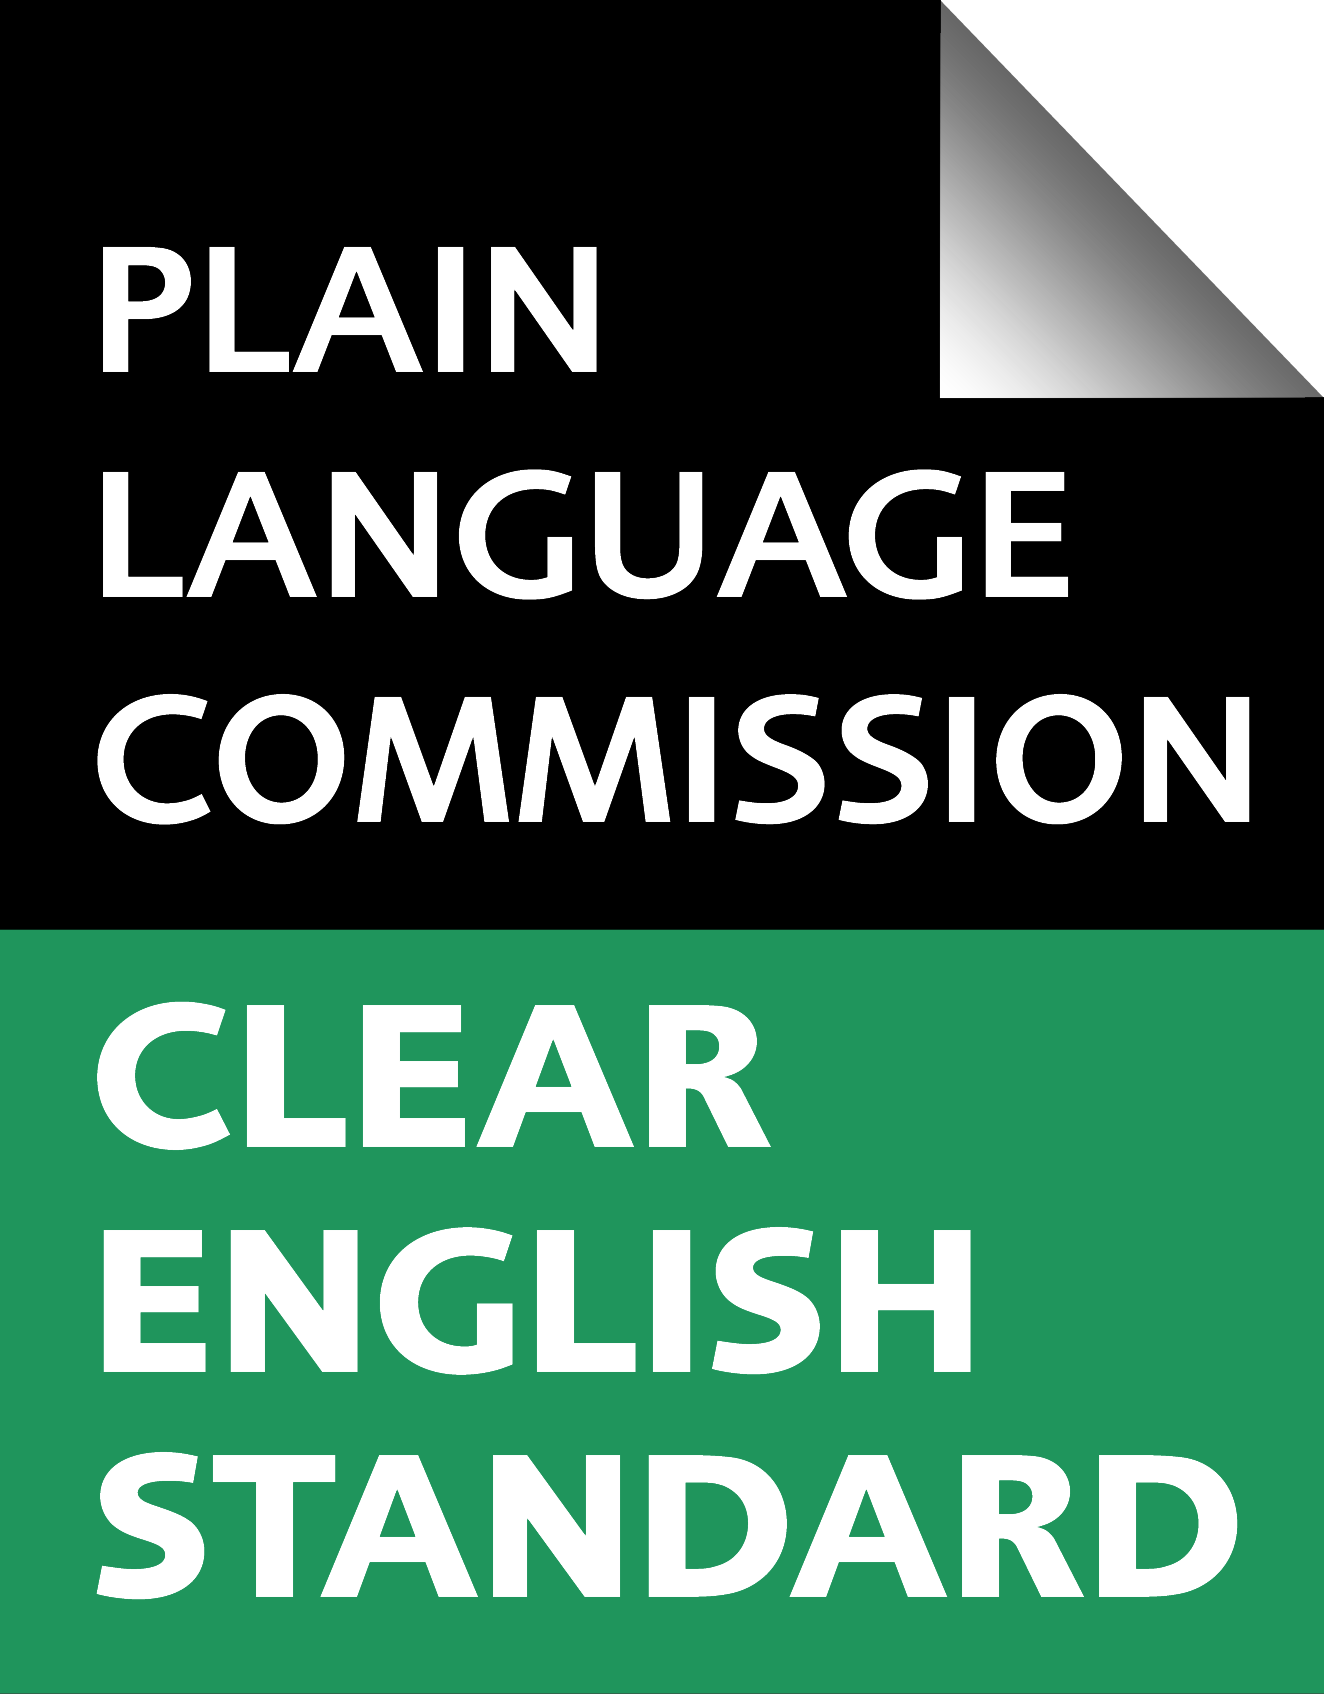 Clear English Standard logo